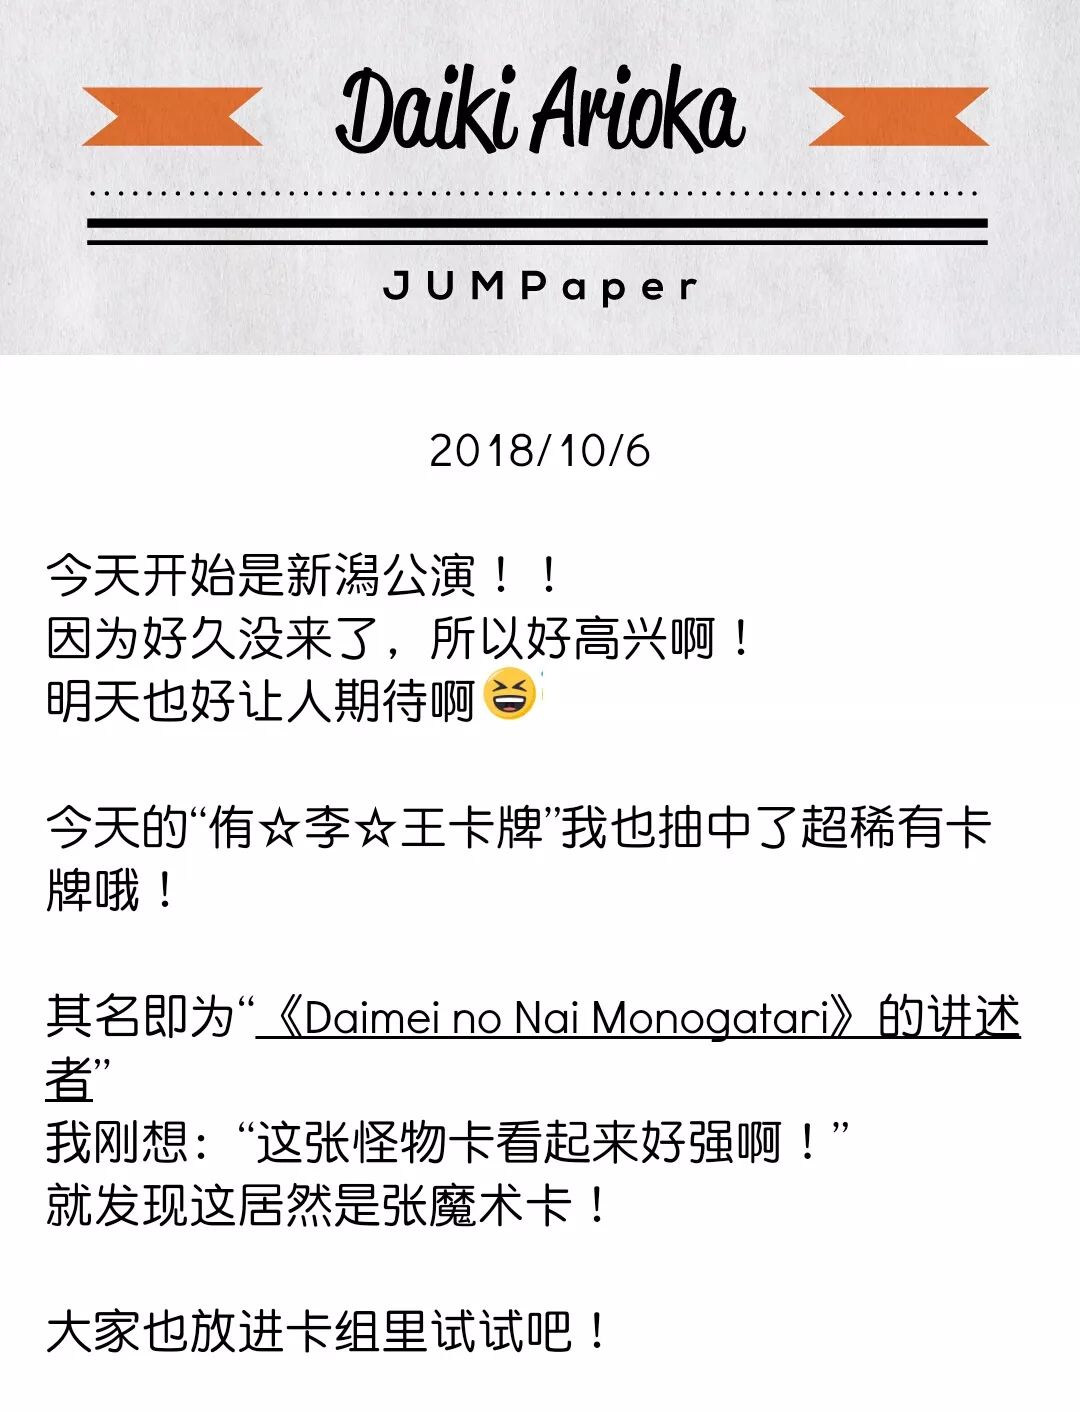 Jumpaper 慧贵知in Oct Heysayjump梦幻游乐园 微信公众号文章阅读 Wemp